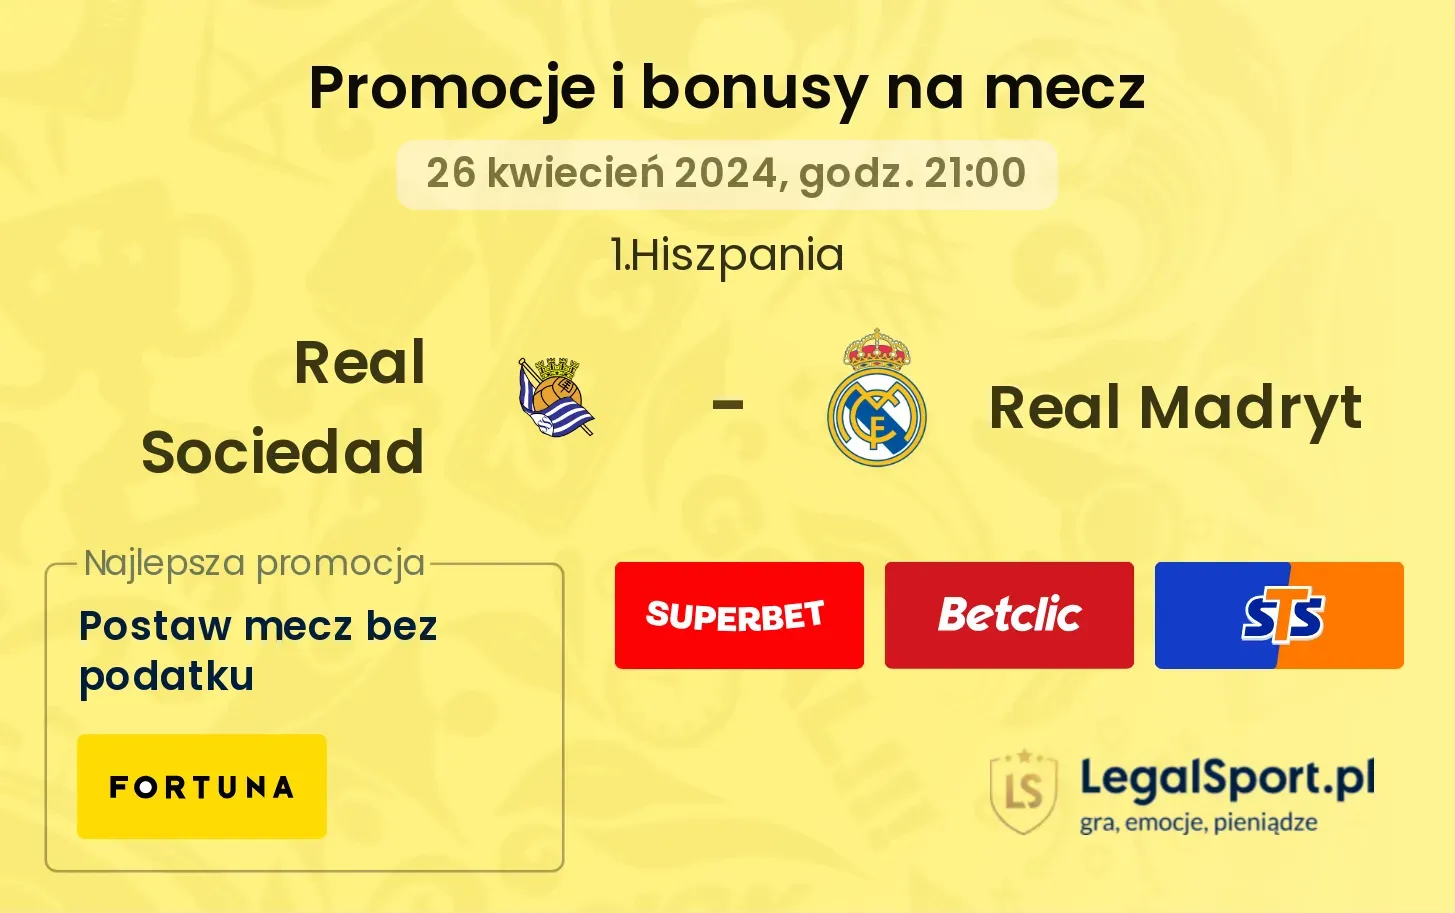 Real Sociedad - Real Madryt bonusy i promocje (26.04, 21:00)